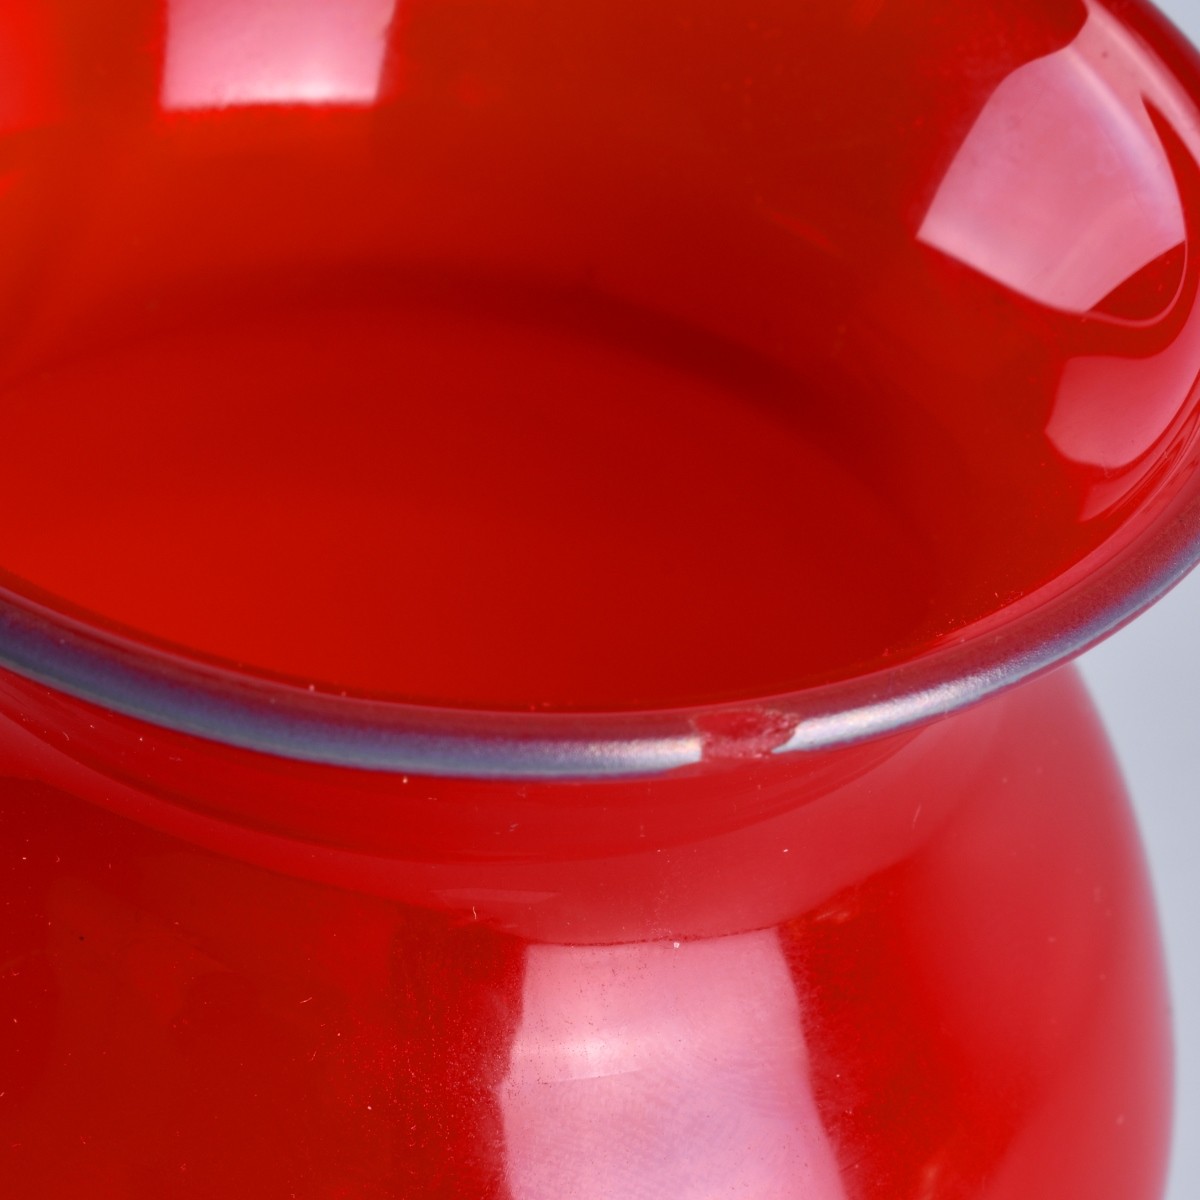 Tiffany Studios Red Glass Vase